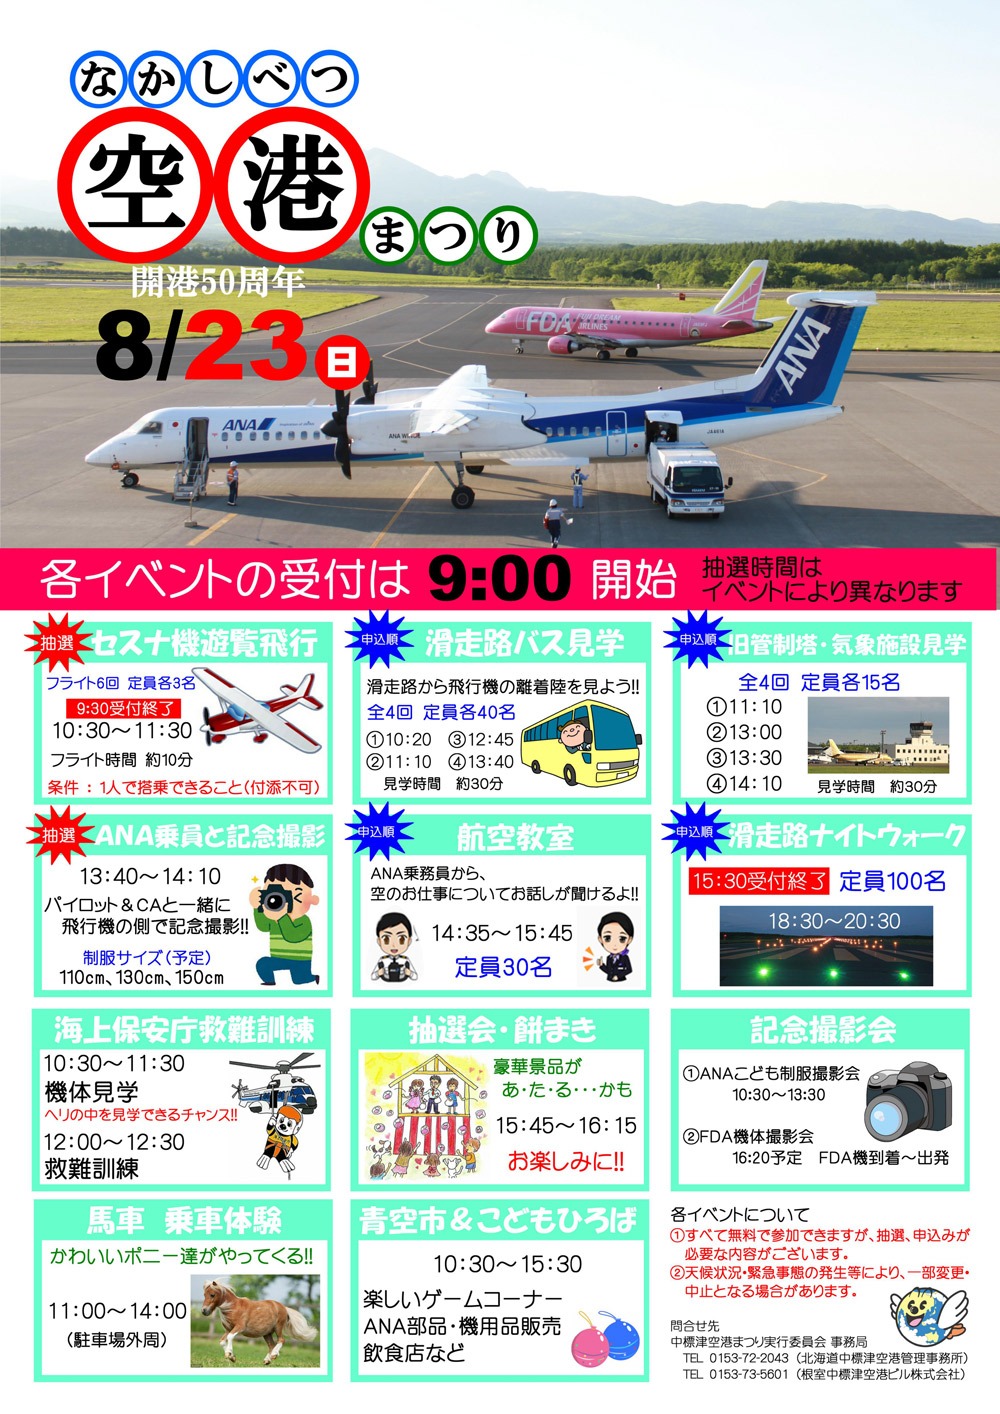 http://www.nakashibetsu-airport.jp/2015matsuri.jpg